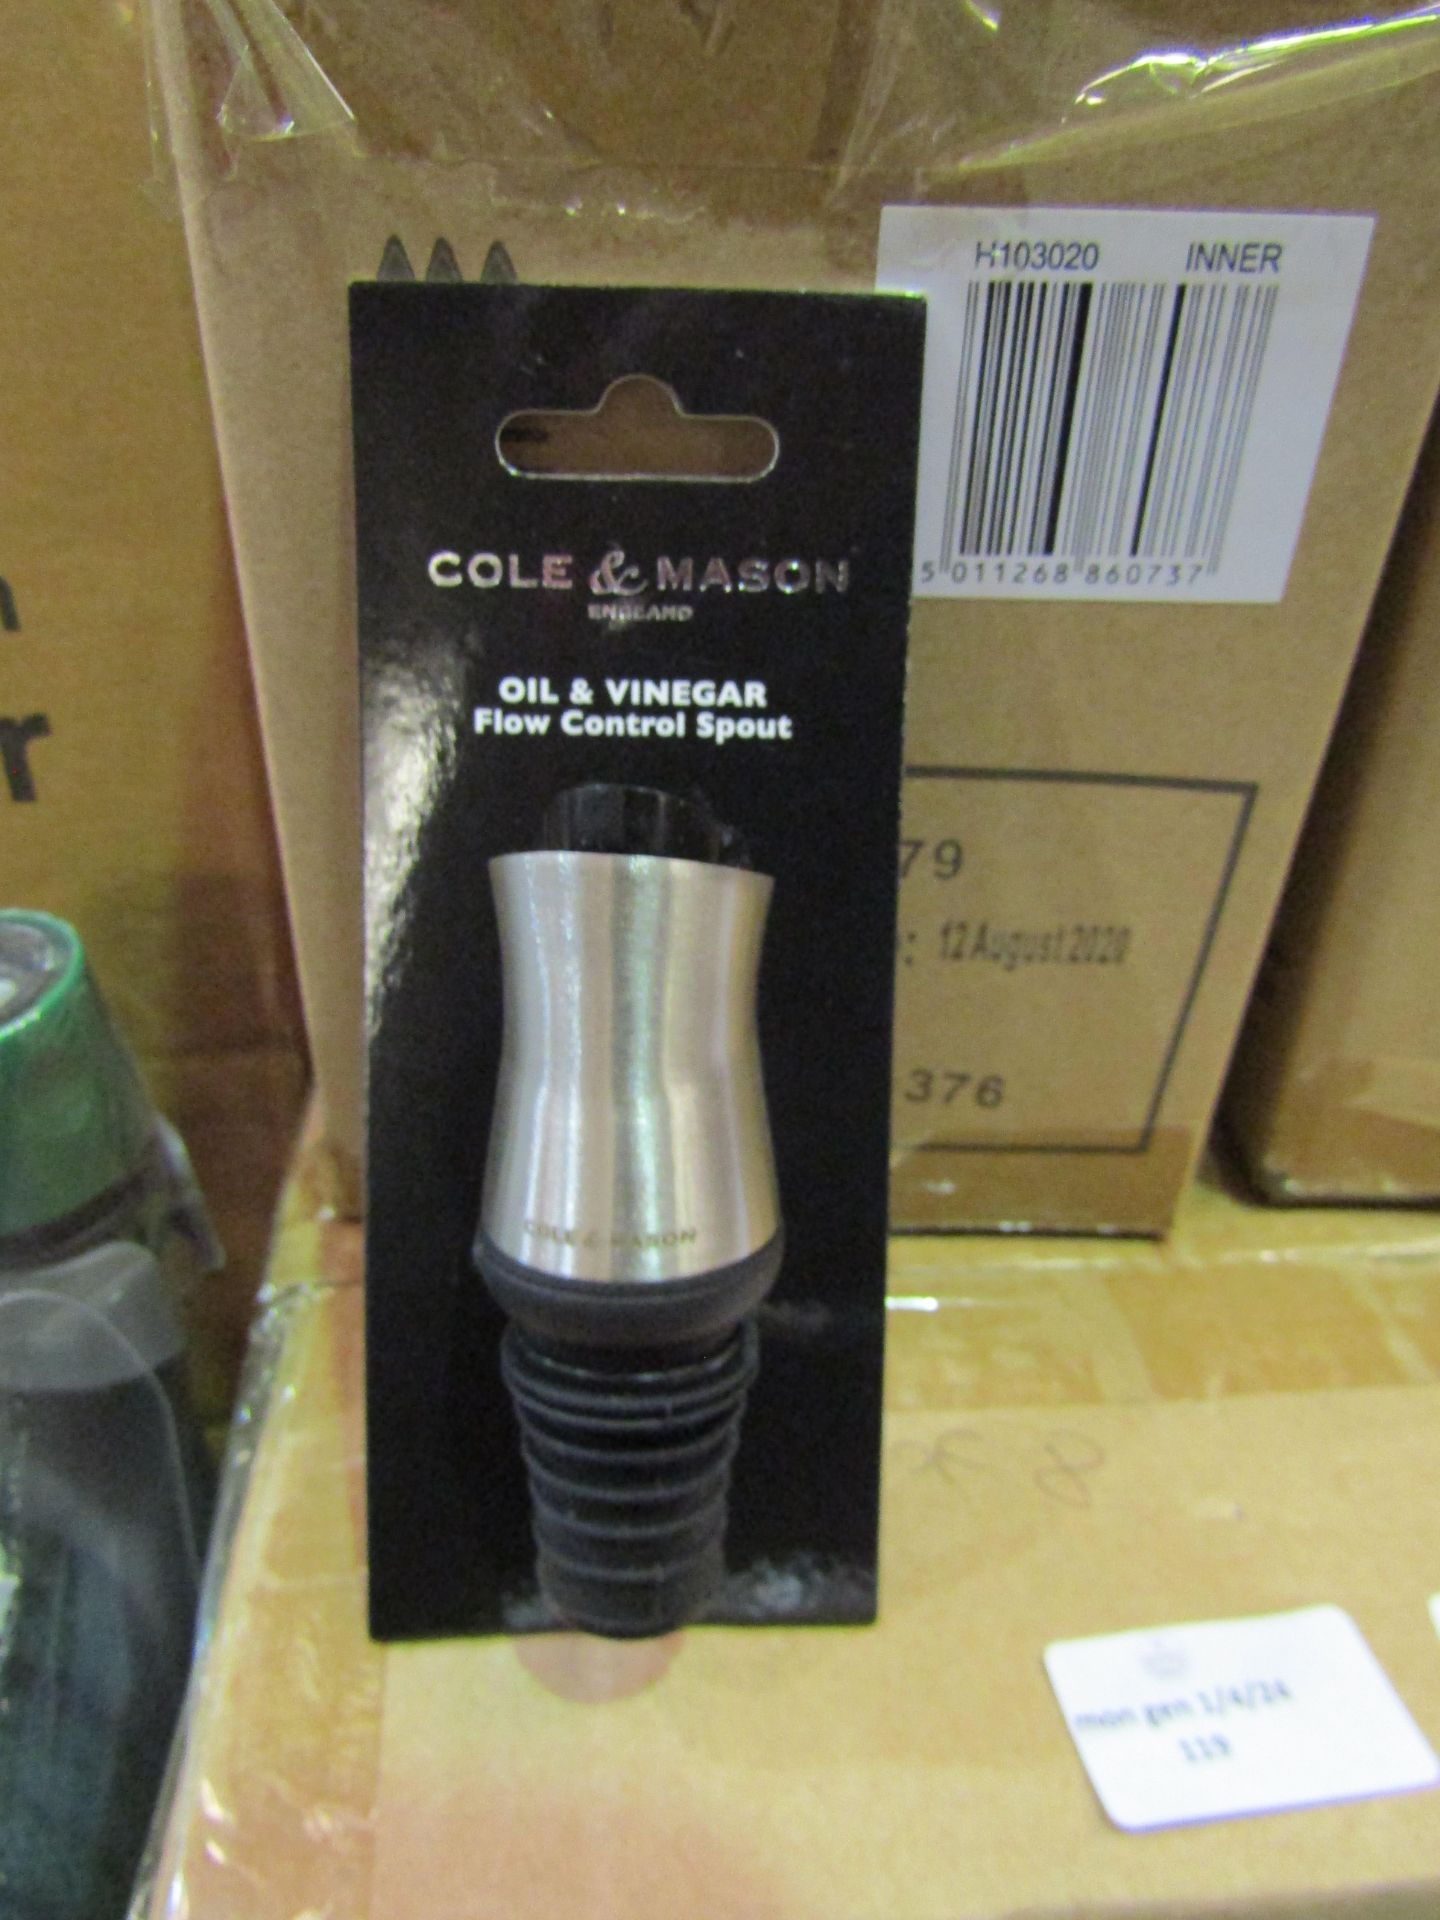 Box Of 8x Cole & Mason Oil & Vinegar Flow Control Spout - New & Boxed.